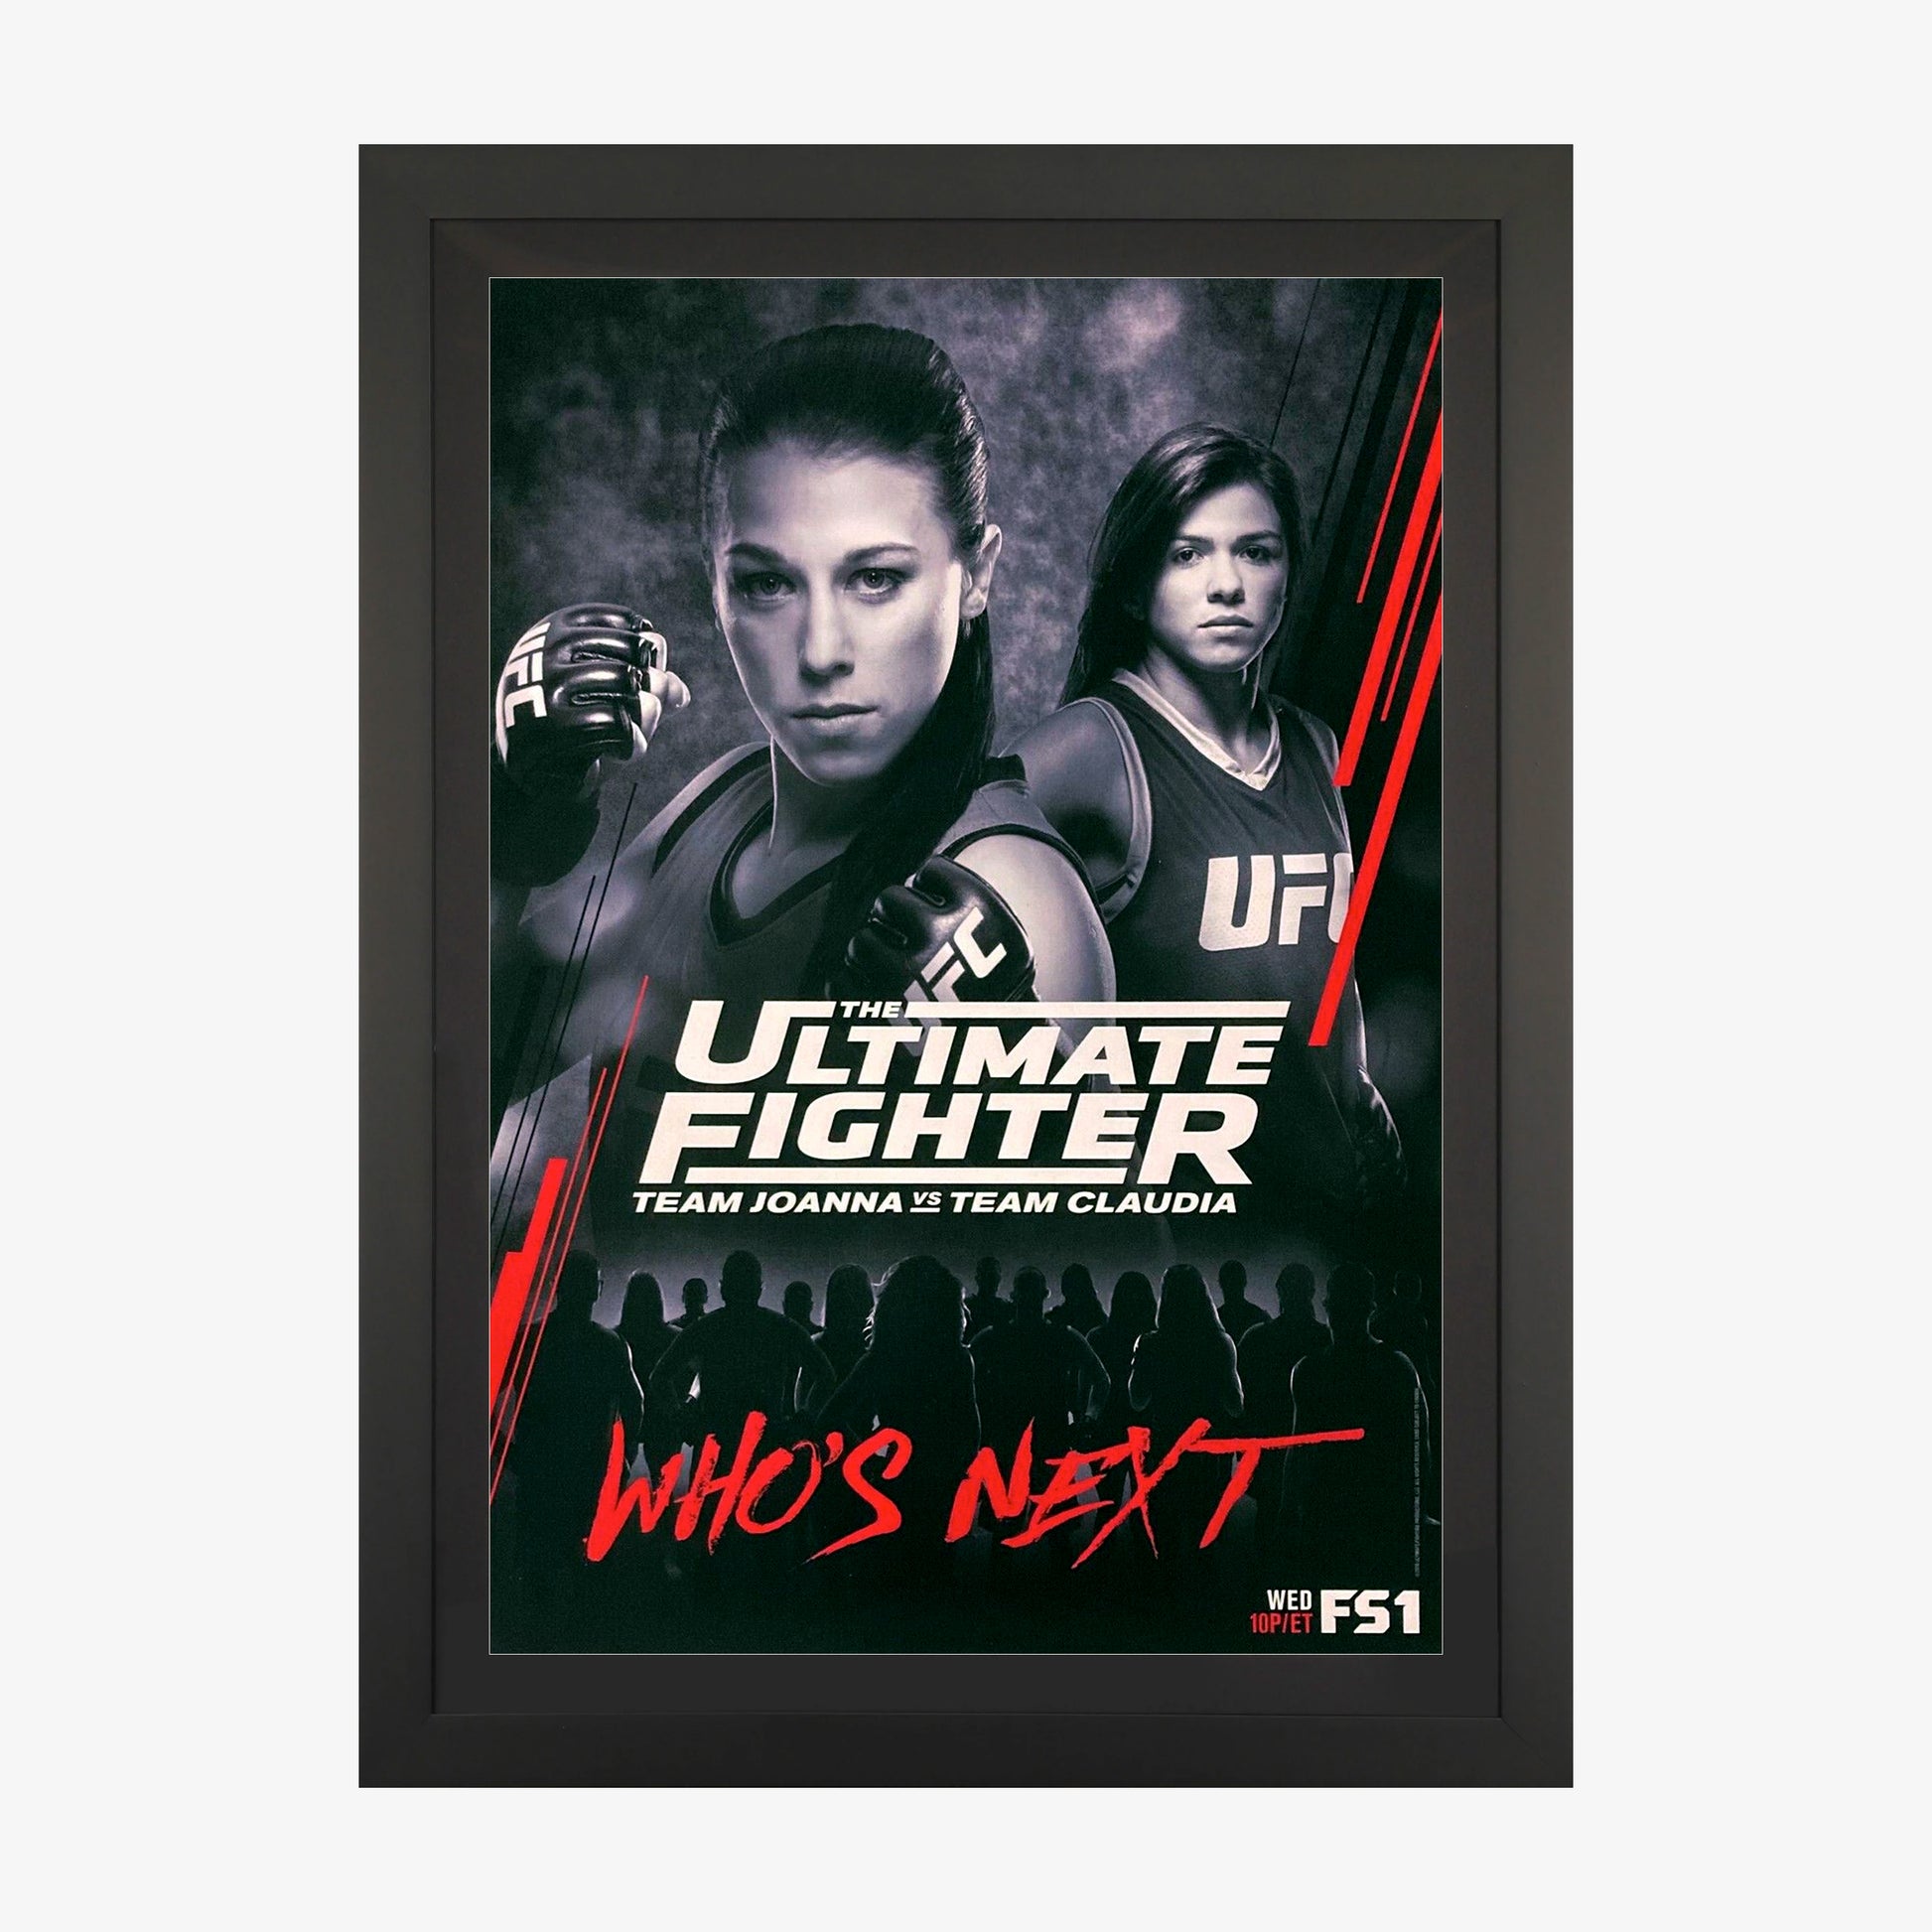 The Ultimate Fighter 23: Team Joanna vs Team Claudia Poster - Fightabilia